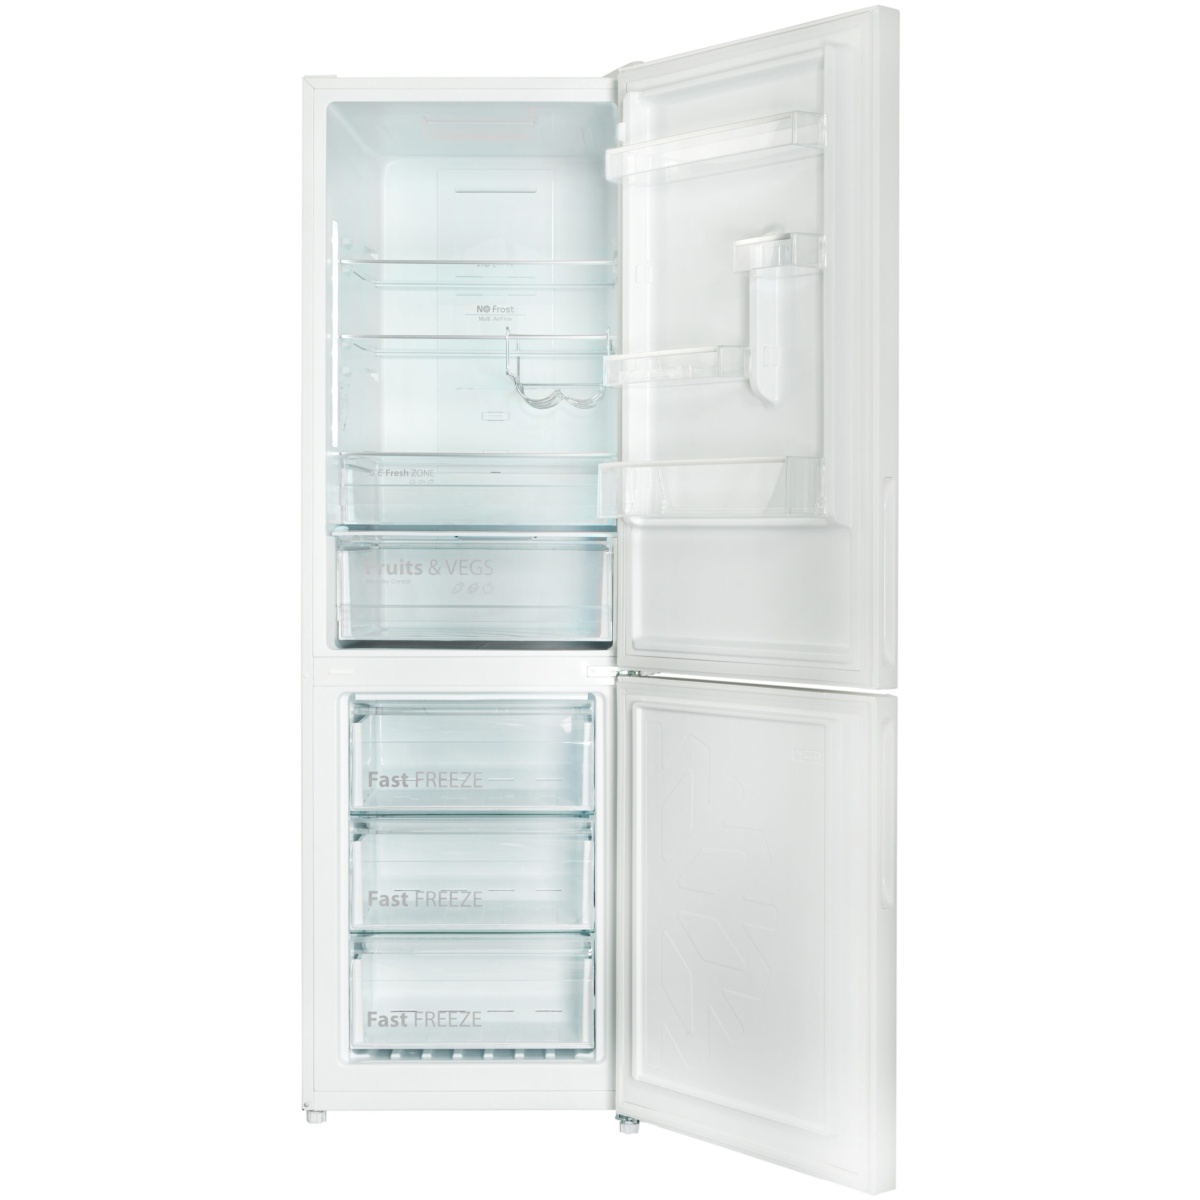 Холодильник Snaige RF59FB-TN00NE (Fresh INN / объем - 341 л / высота - 185.5см / A+ / белый / NoFrost)